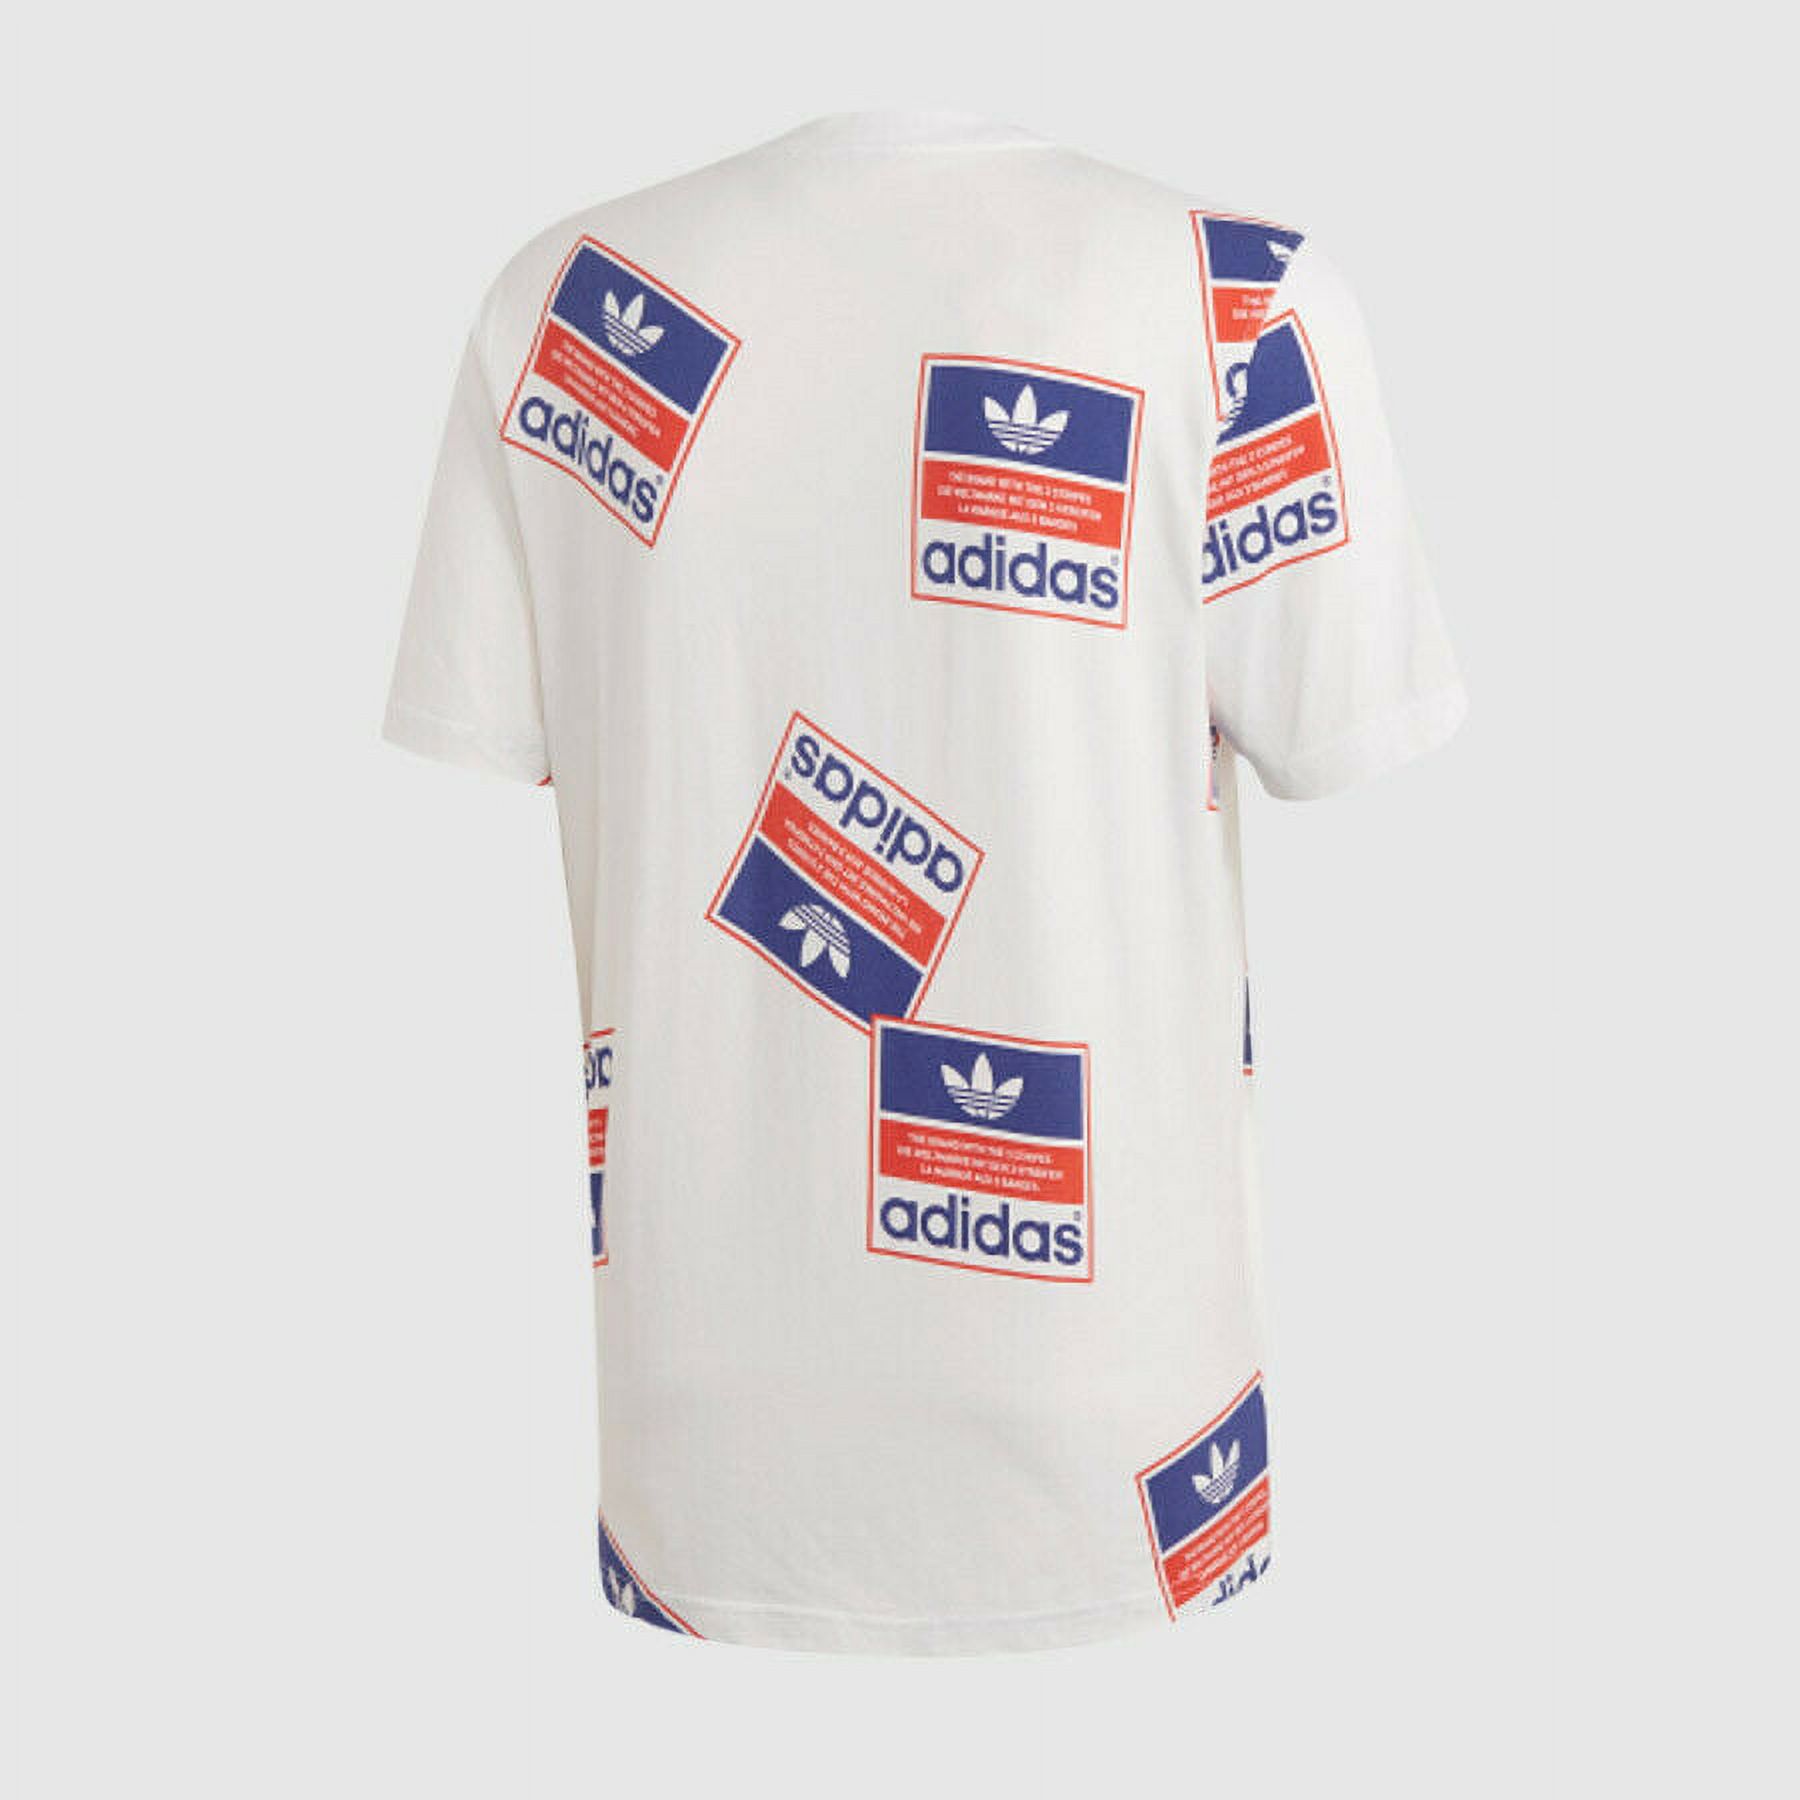 Adidas Originals Men's Stickerbomb T-Shirt White DX3649 - image 2 of 5